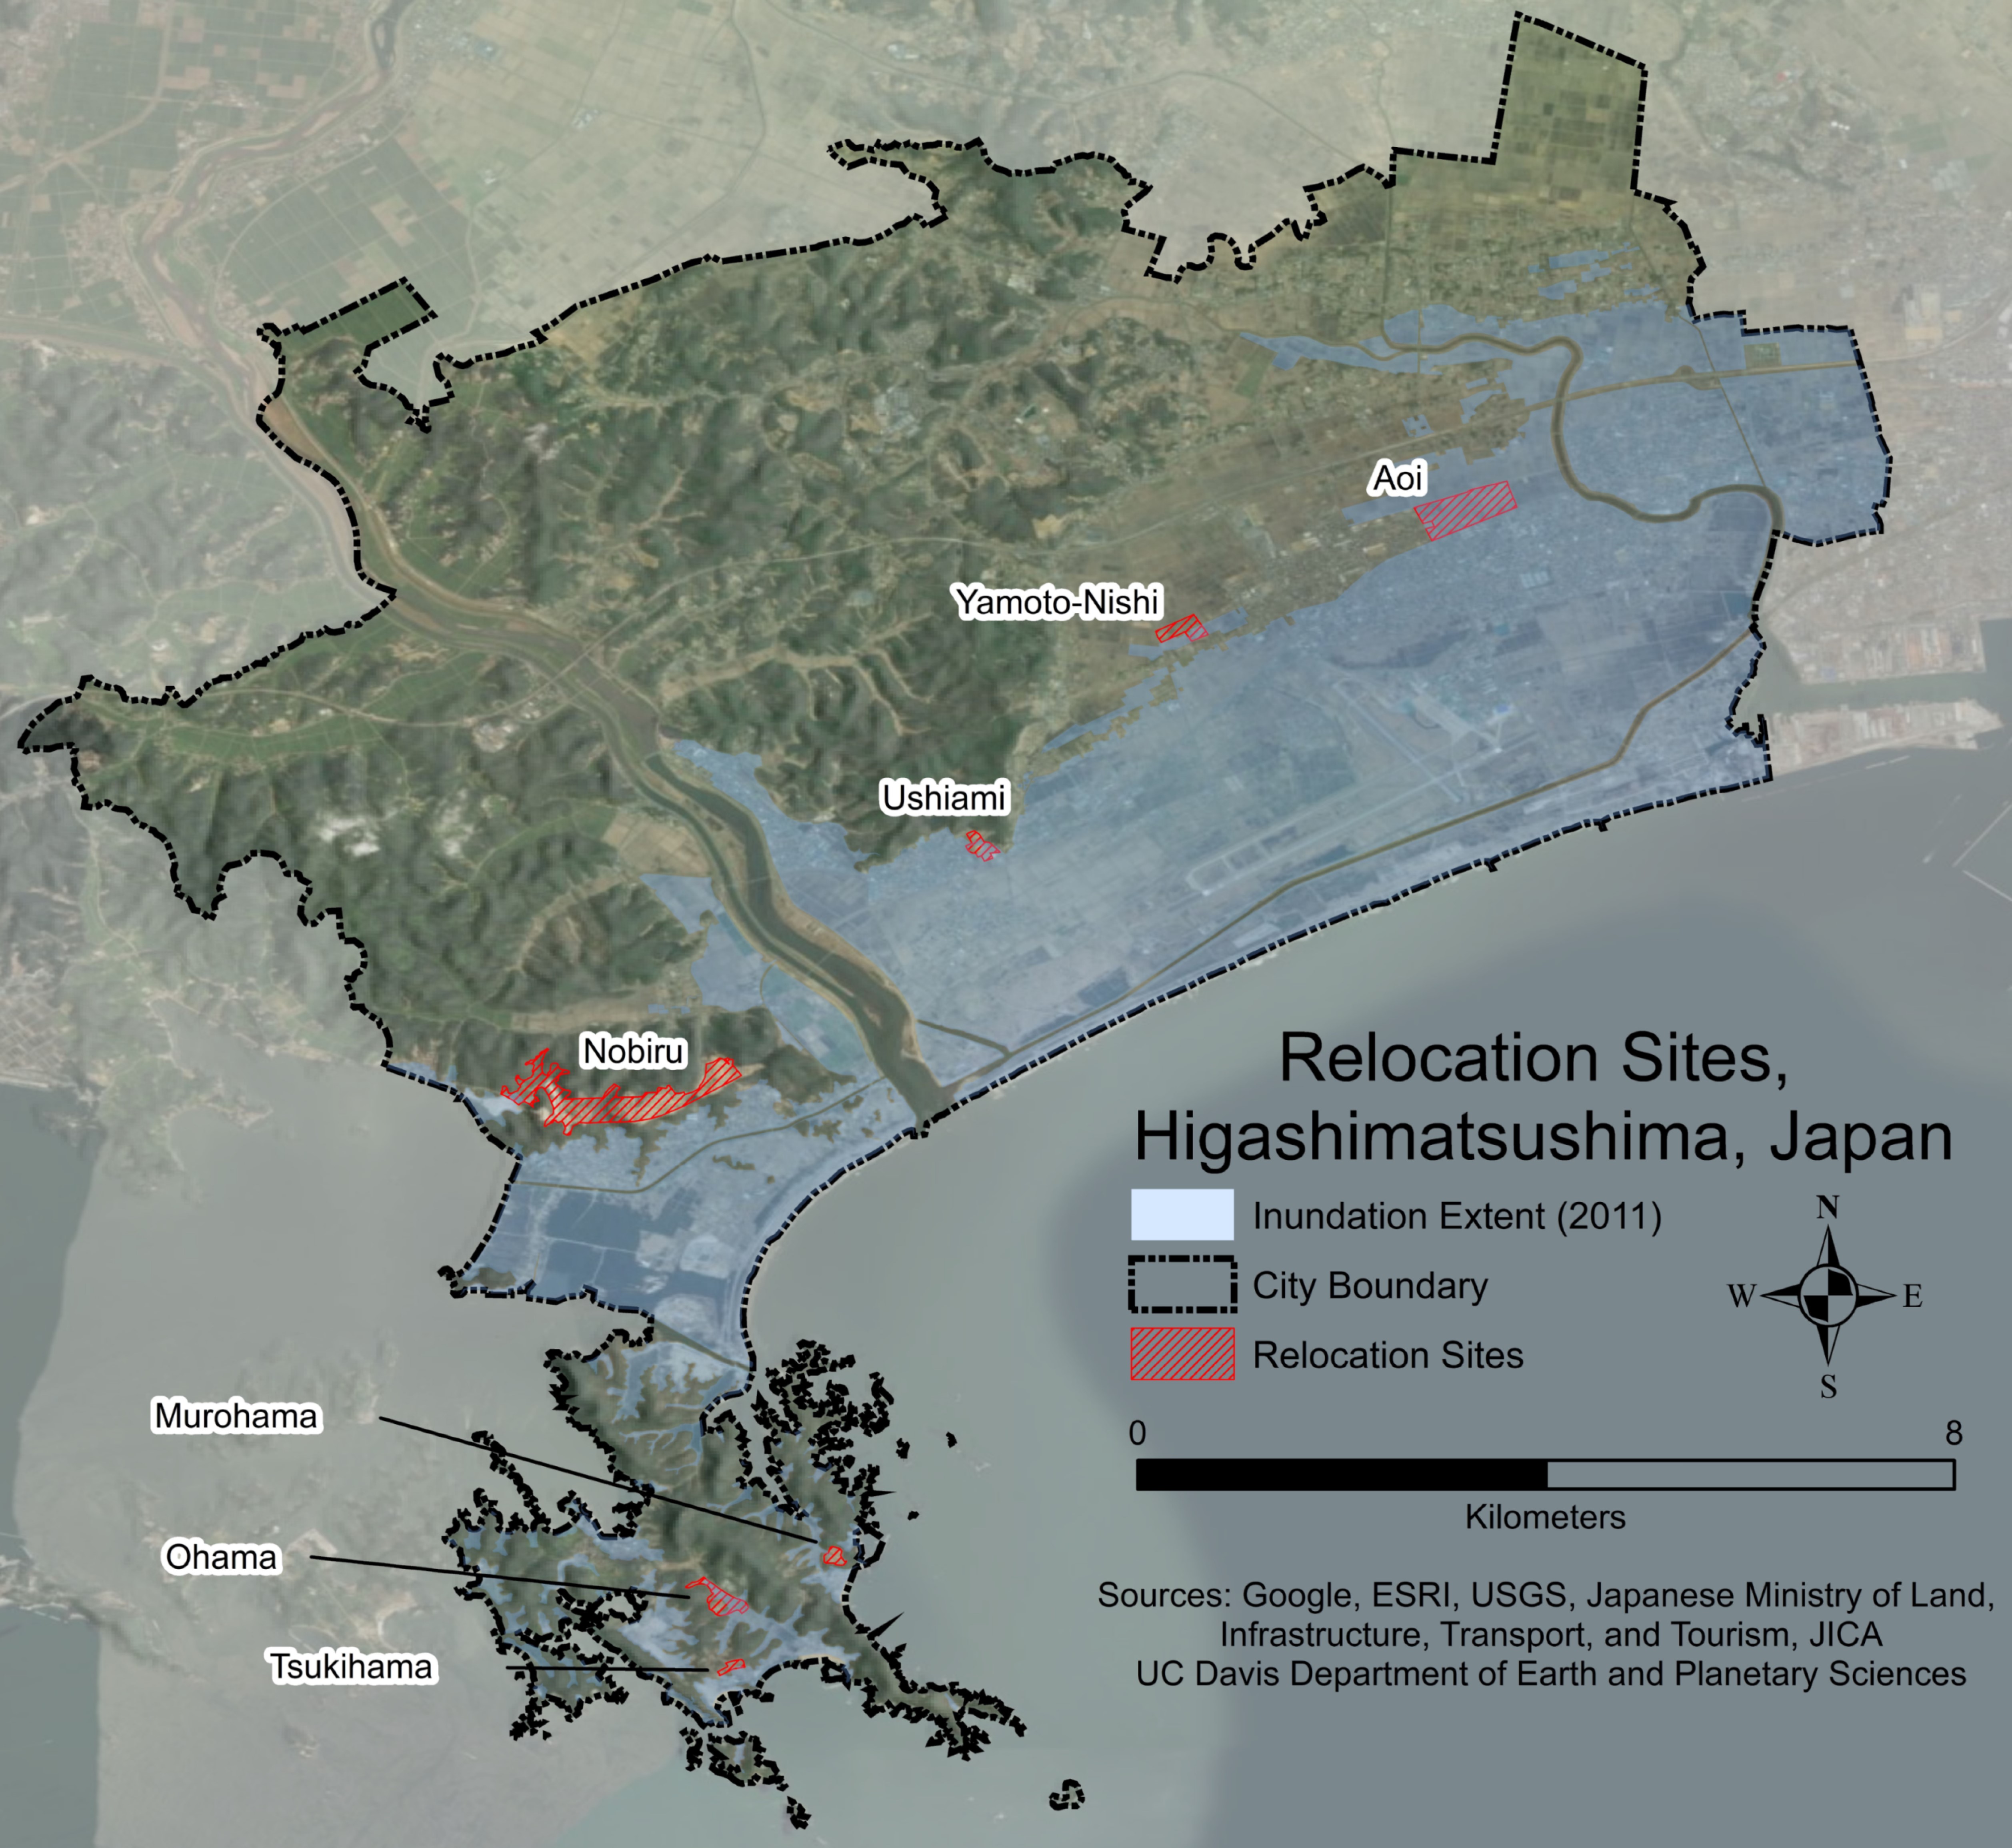 Relocation sites in Higashimatsushima